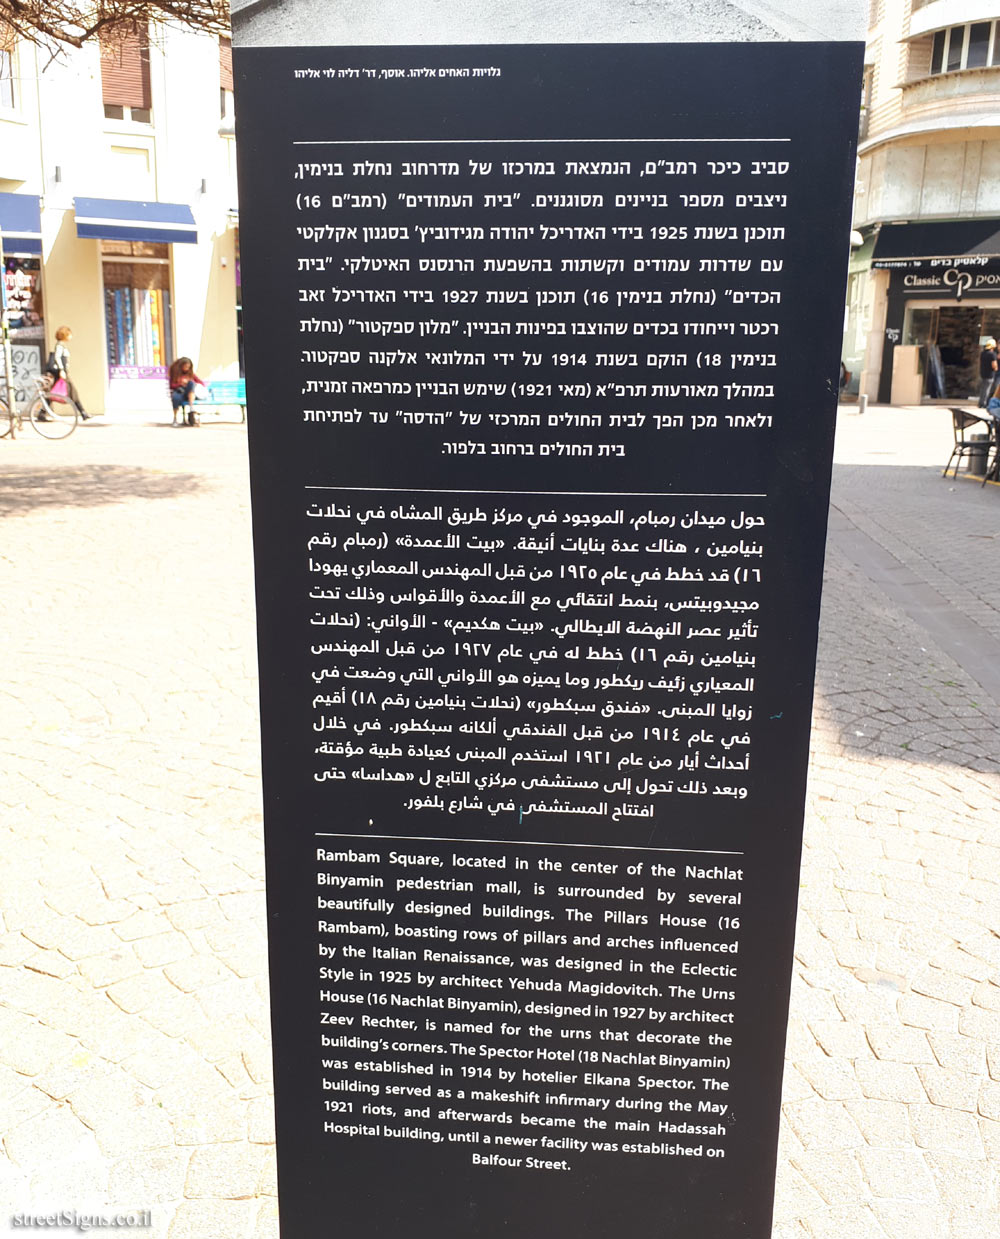 Tel Aviv - Rambam Square